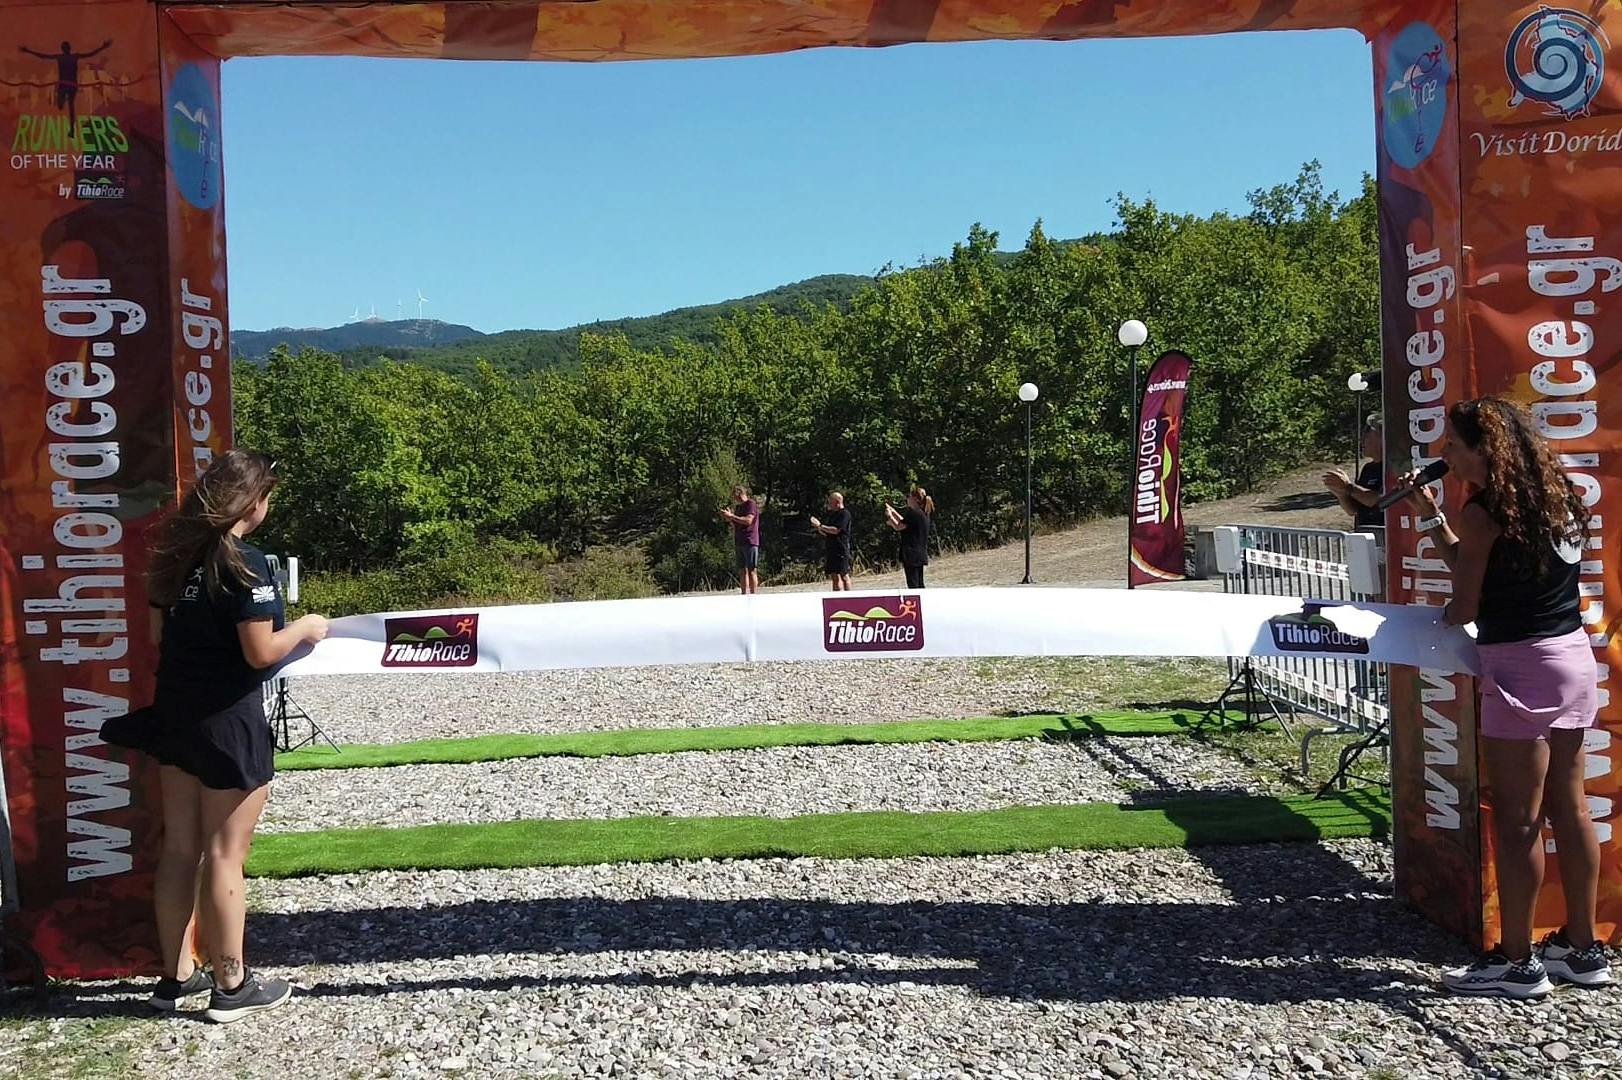 3Ultra Summits Tihiorace 250km: Μεγάλος νικητής του αγώνα ο Παναγιώτης Καταλιάκος!